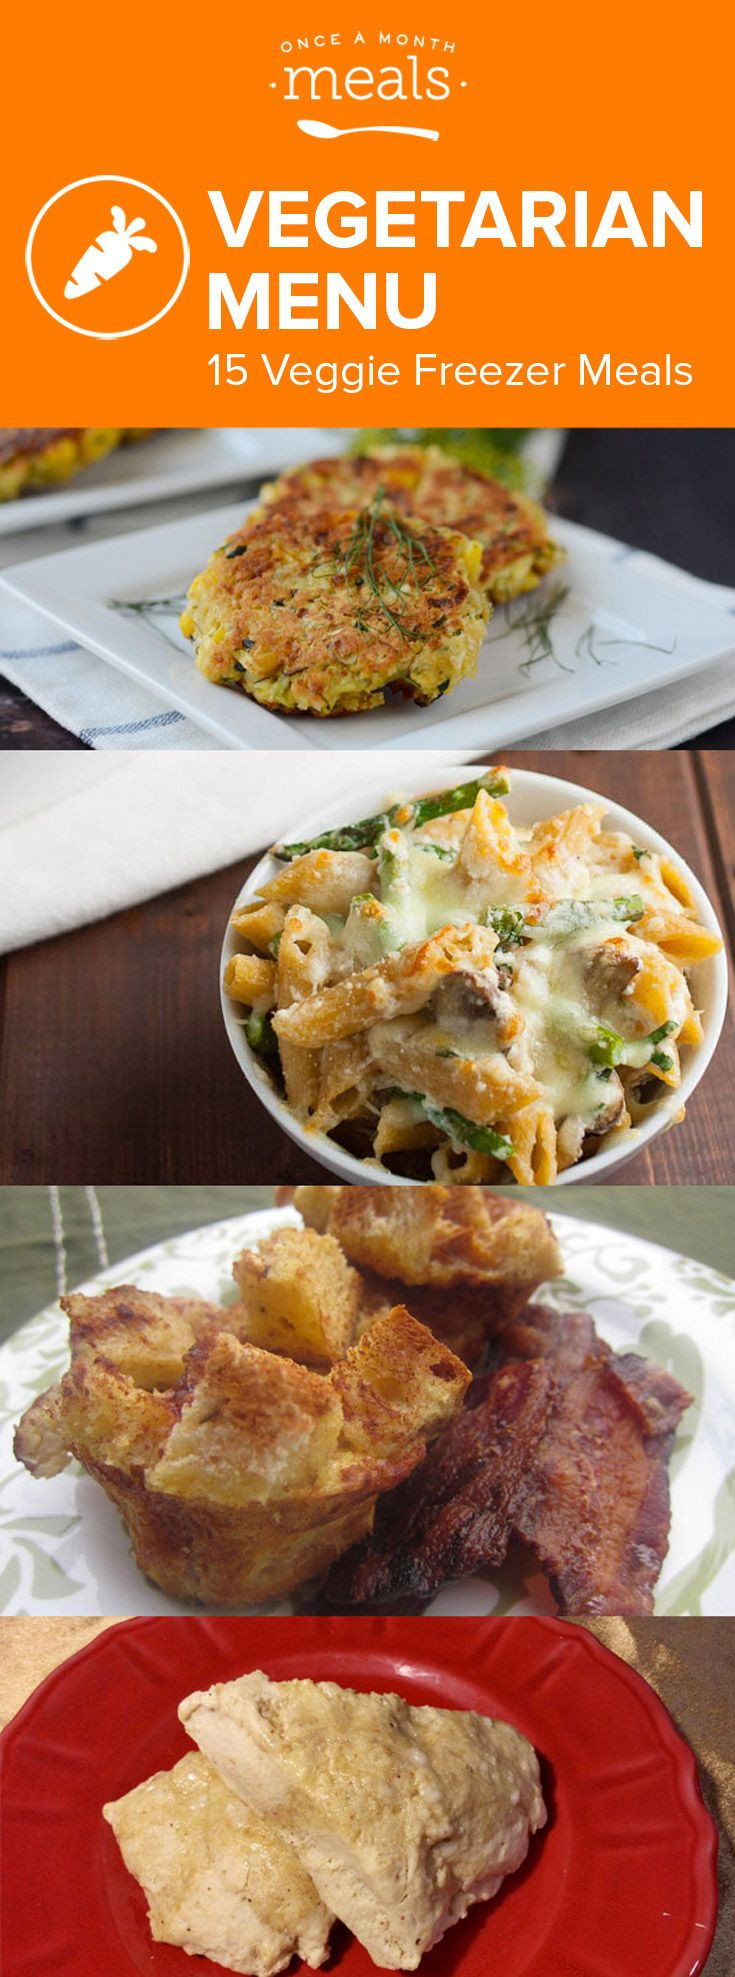 Vegan Freezer Recipes
 Best 25 Ve arian freezer meals ideas on Pinterest